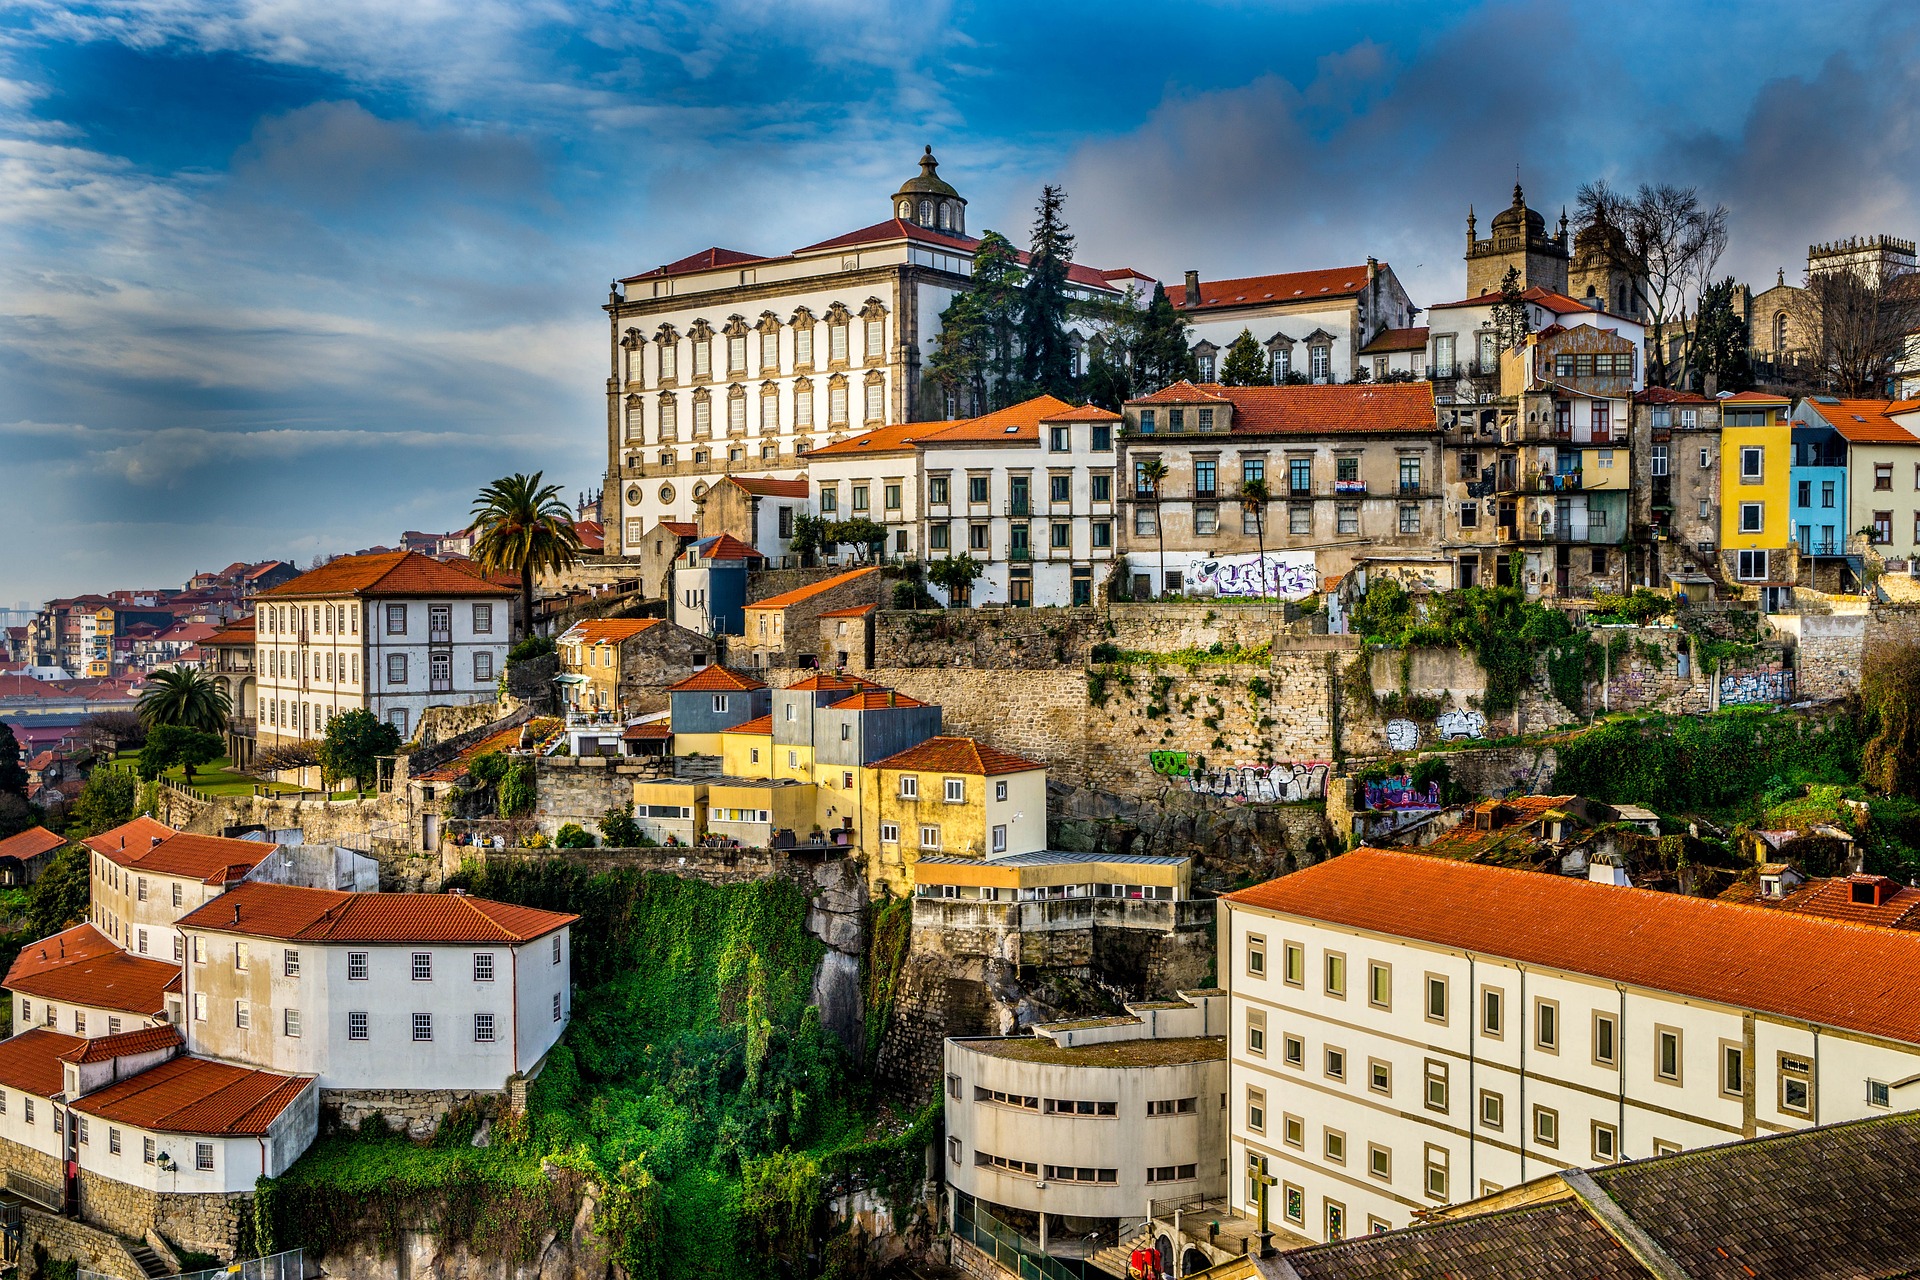 Portugal Real Estate